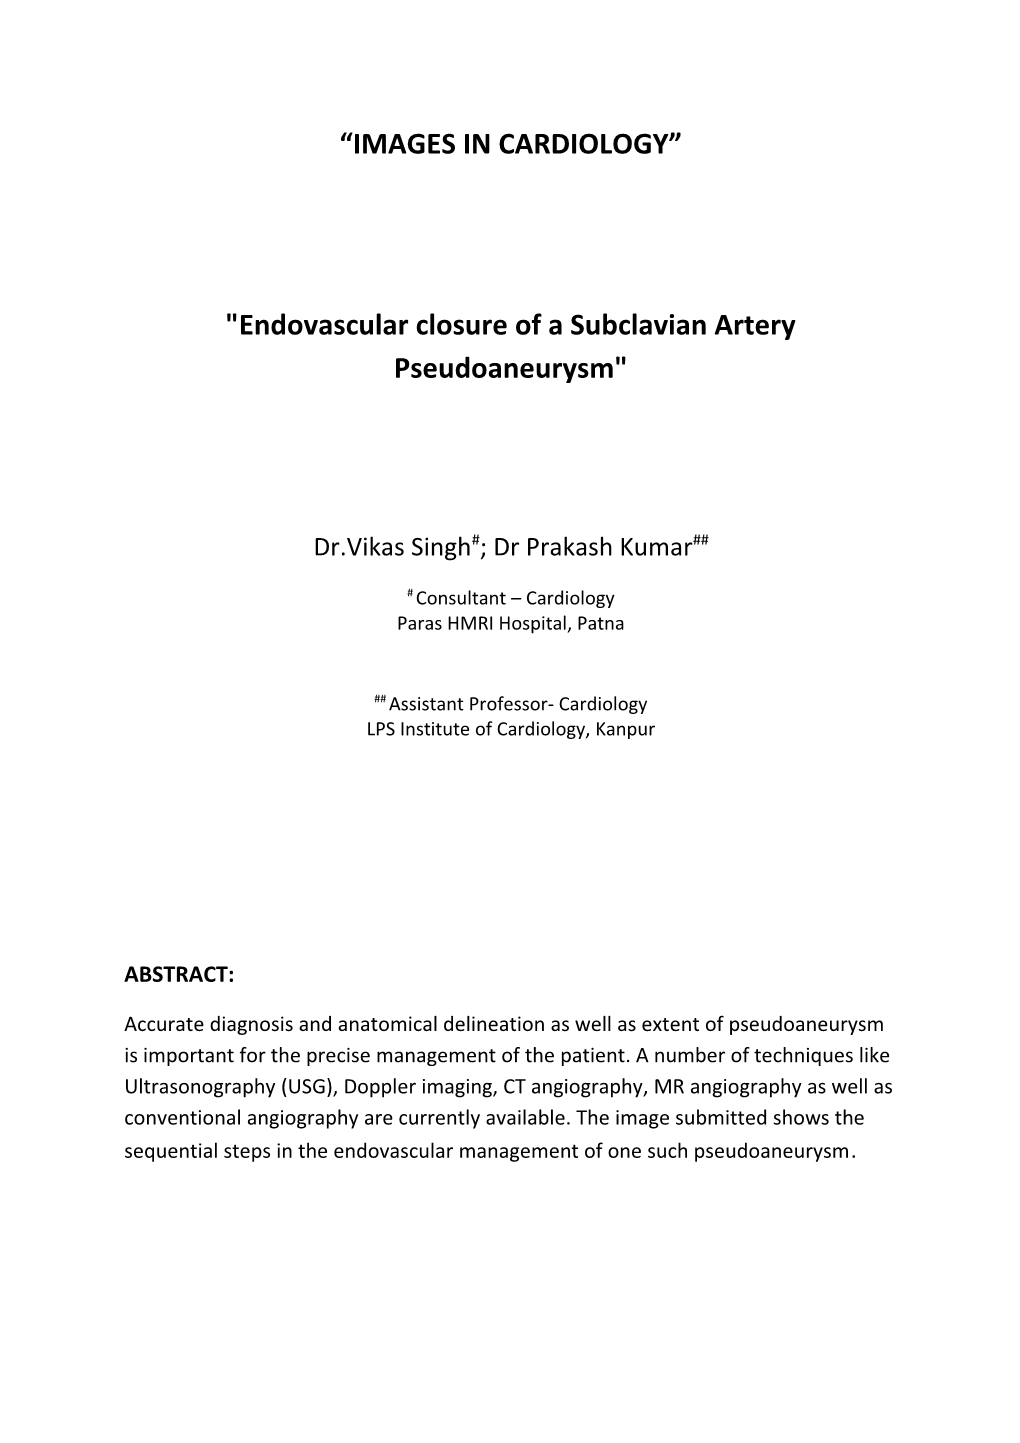 Endovascular Closure of a Subclavian Artery Pseudoaneurysm